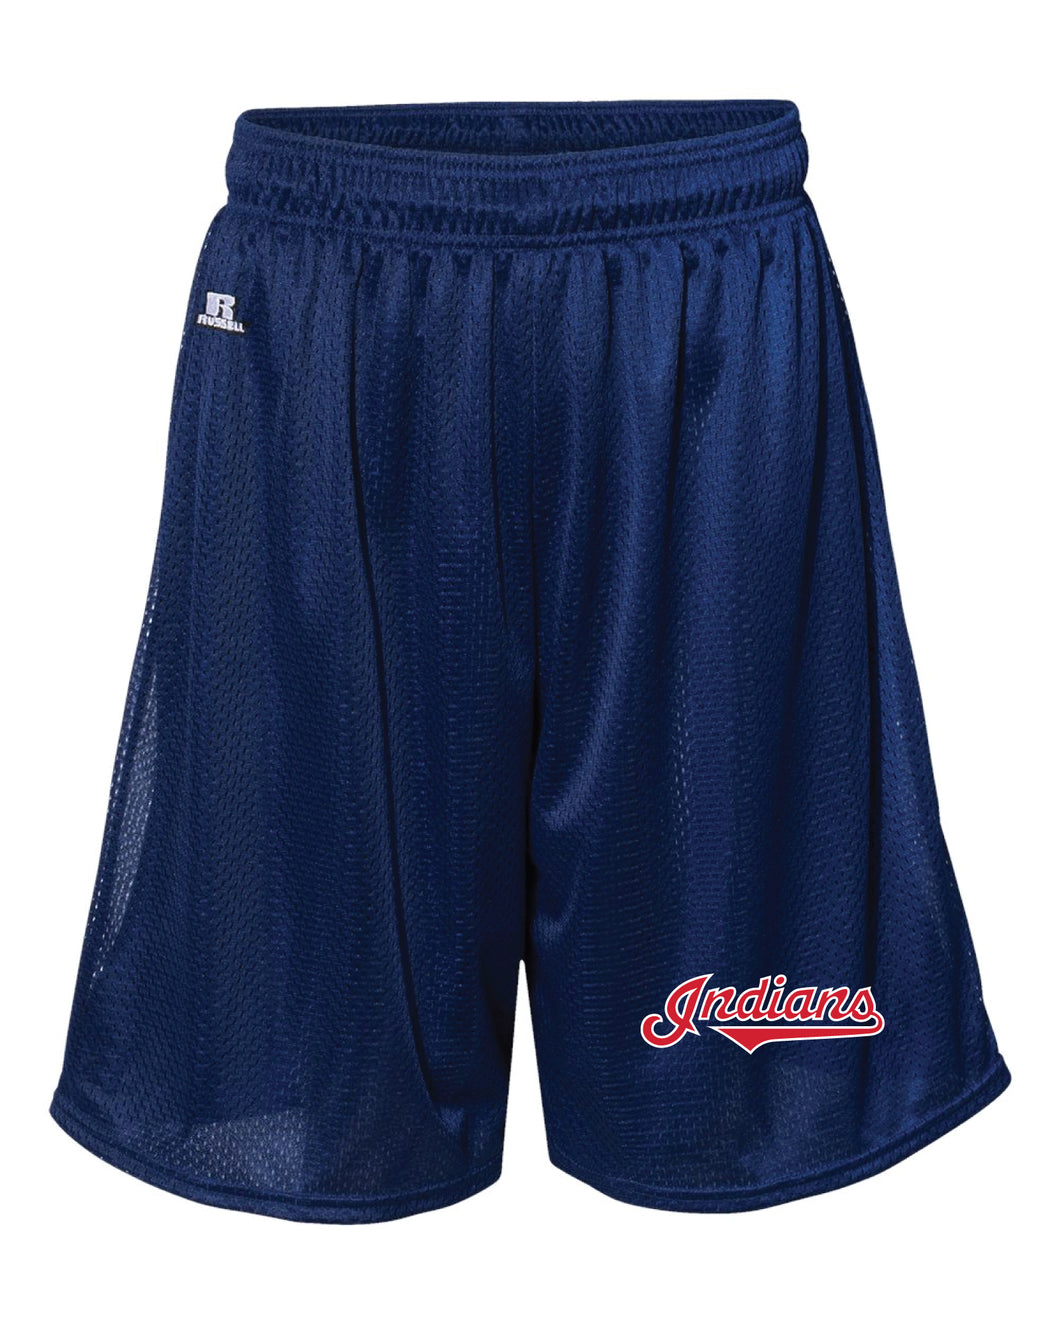 Indians Baseball Russell Athletic Tech Shorts - Navy - 5KounT2018